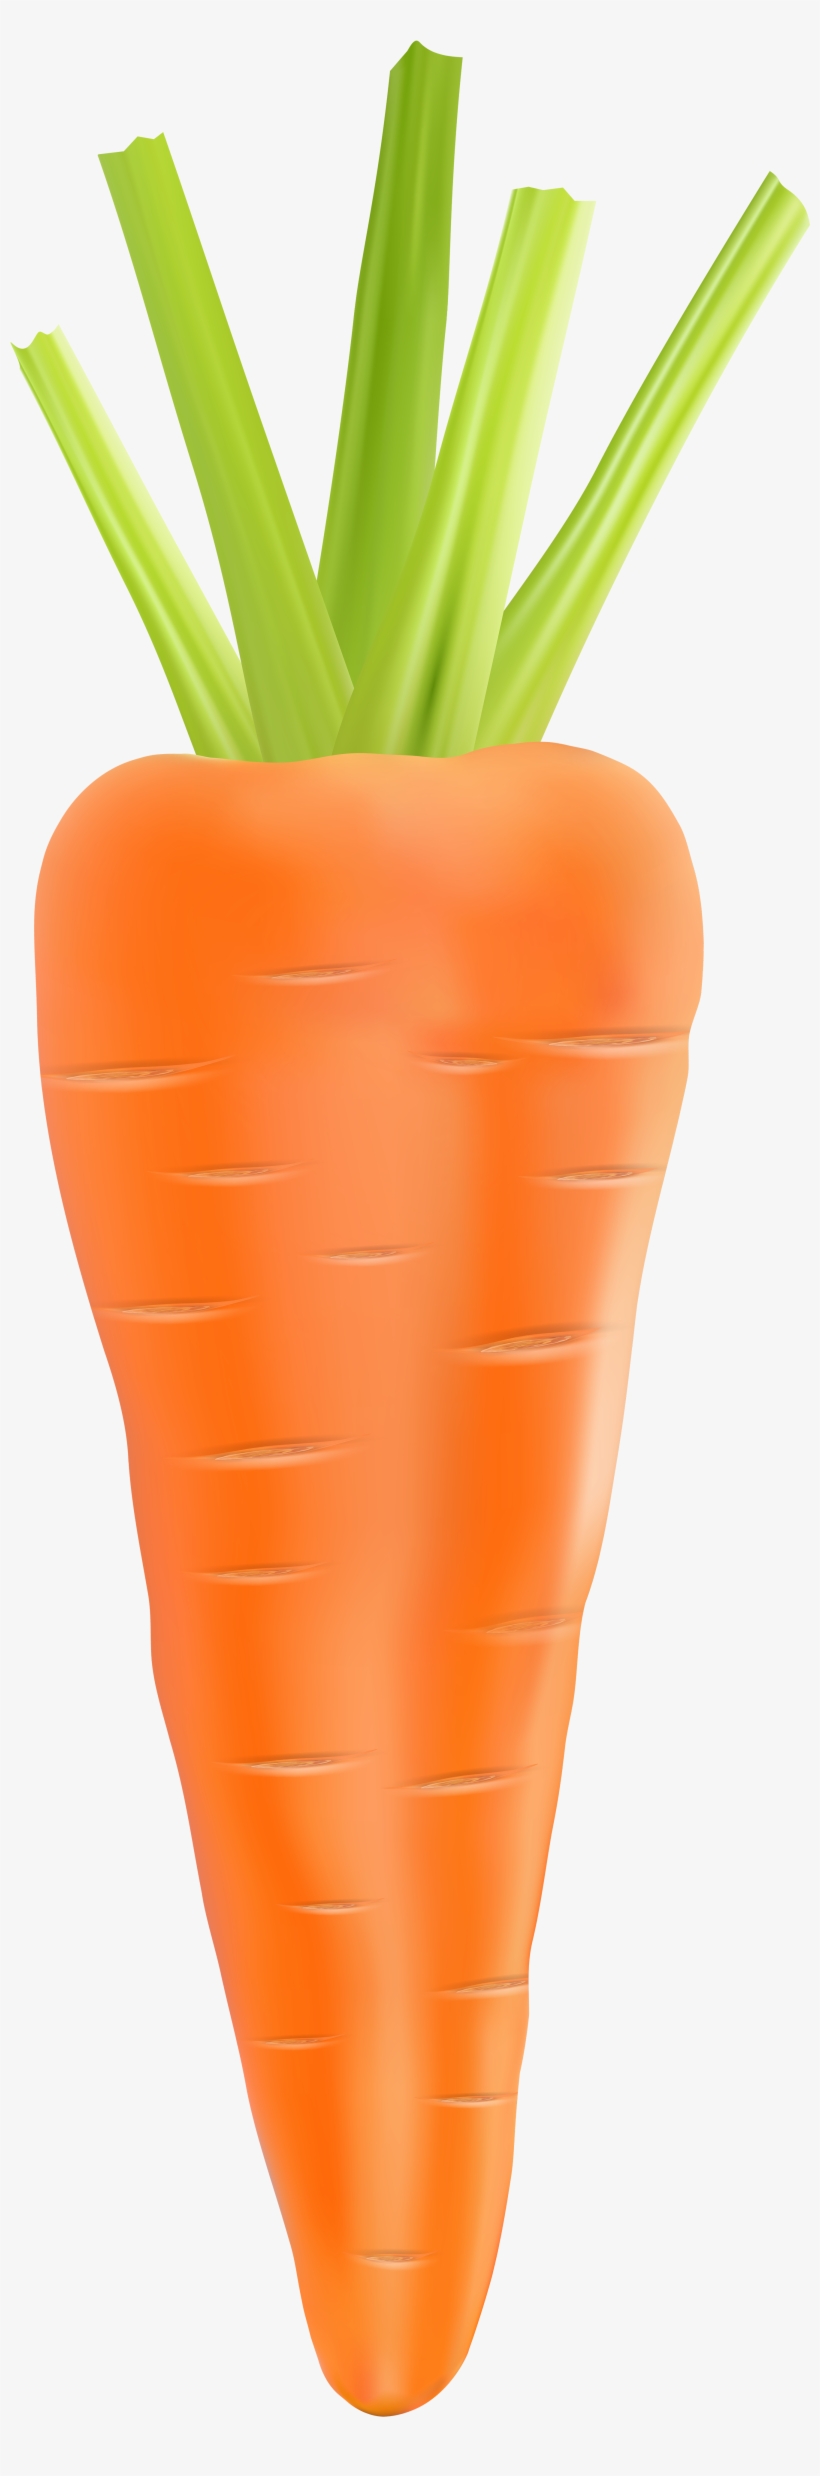 Clipart Vegetables Carrot - Transparent Background Carrot .png, transparent png #283576